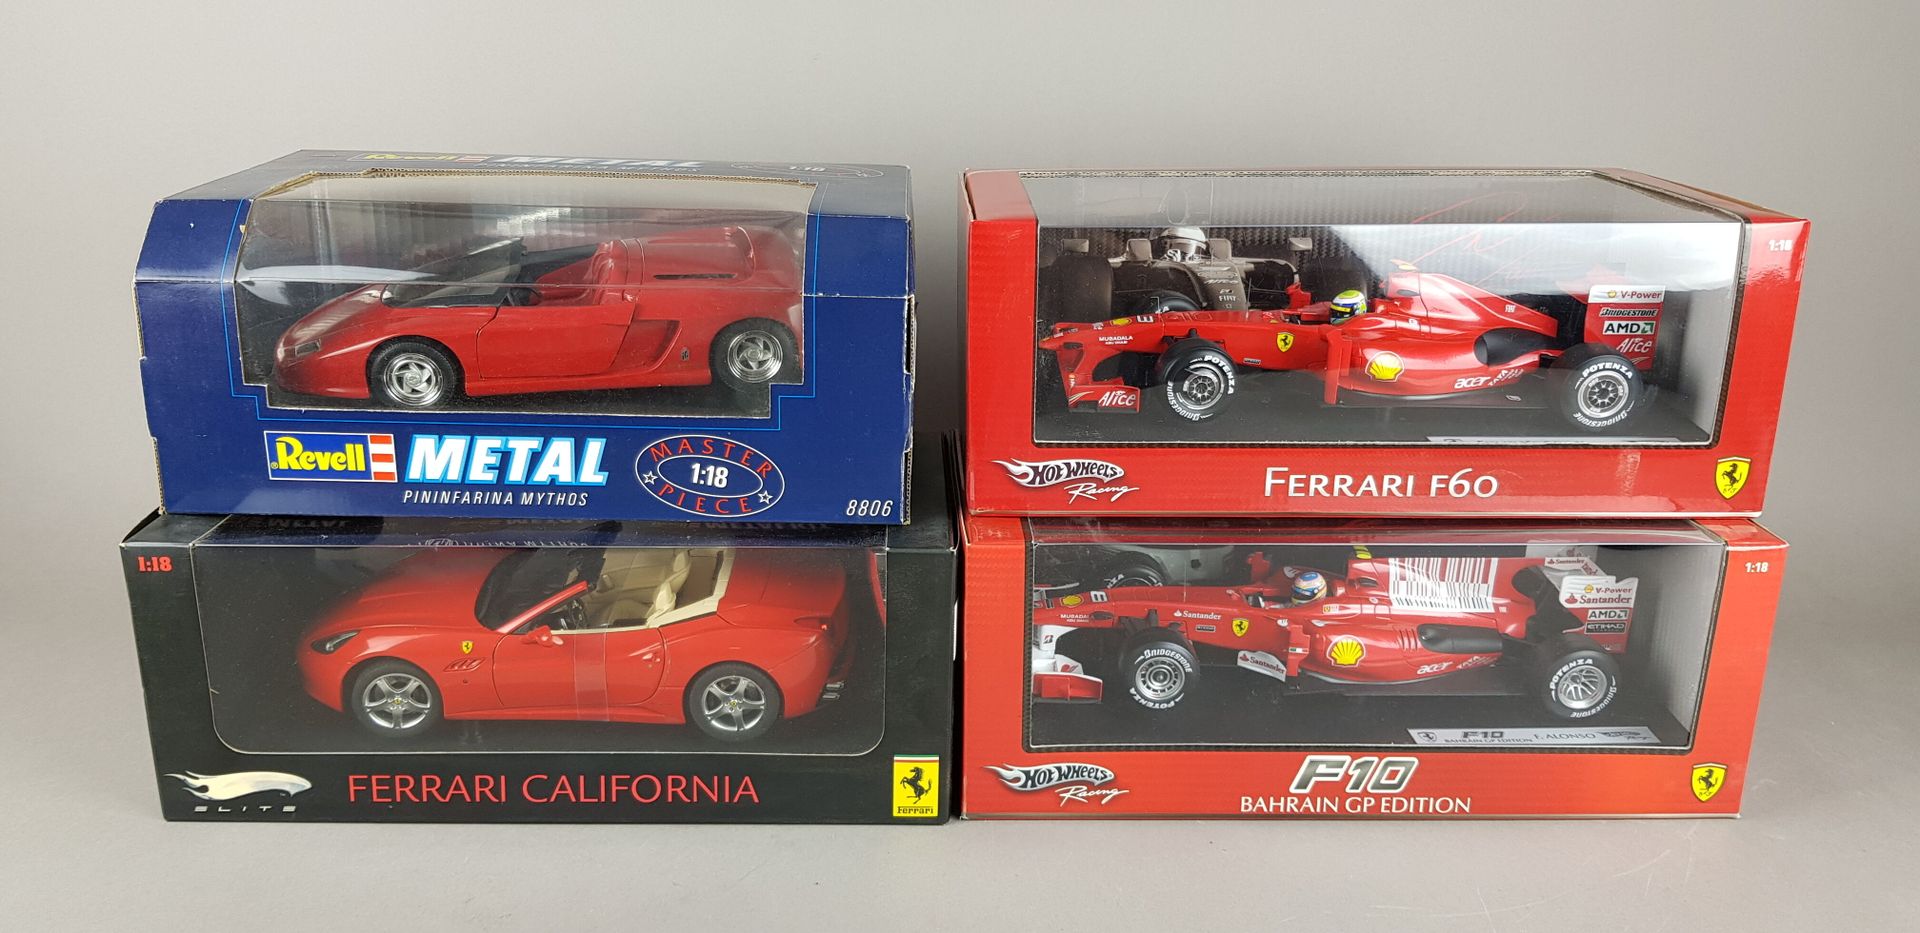 Null QUATRE Ferrari échelle 1/18 :

1x Revell metal Pininfarina Mythos

1x de ma&hellip;